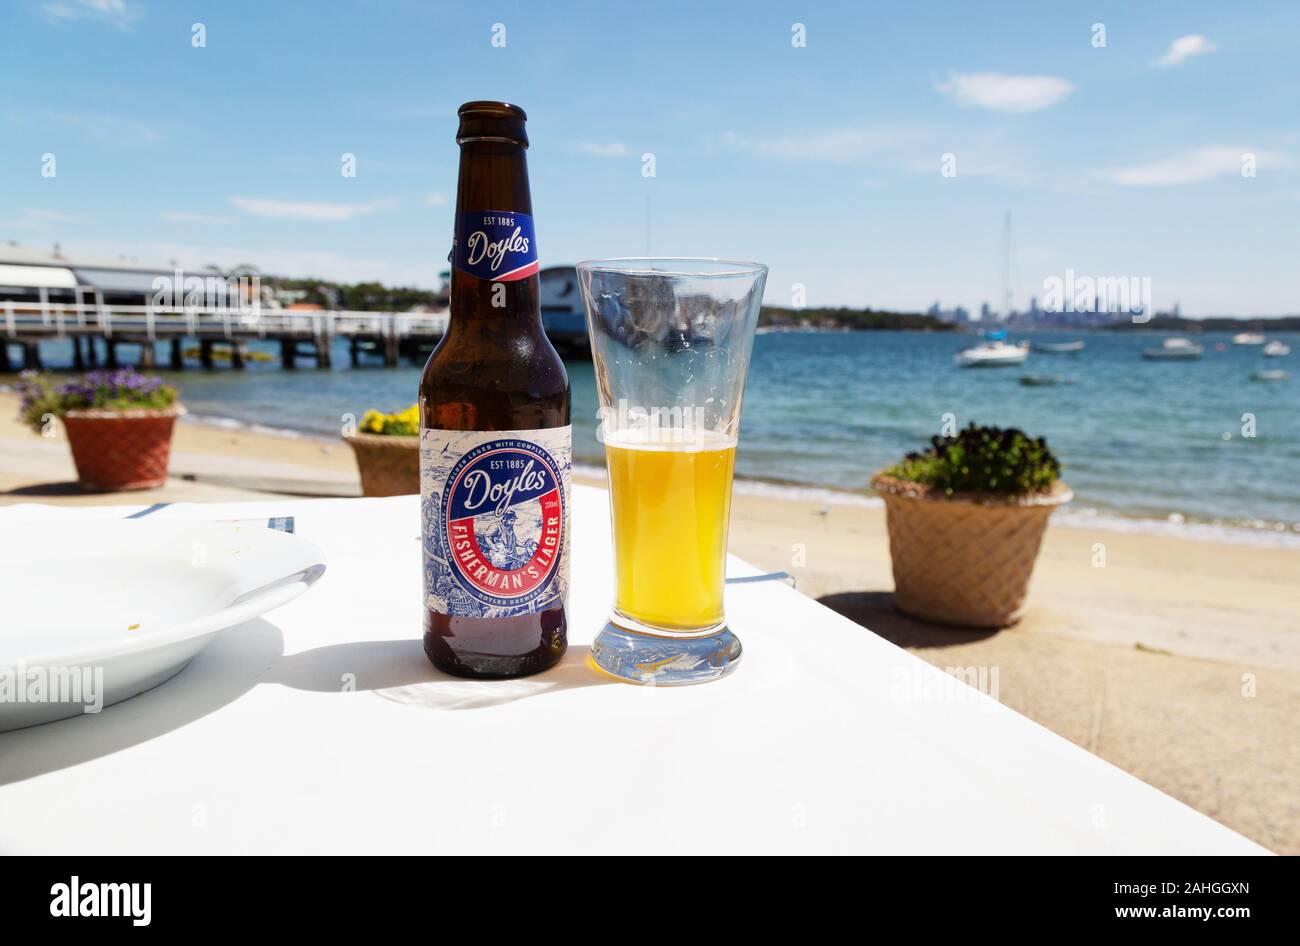 Australia beer; Doyles Fishermans lager, Doyles on the Beach restaurant, Watsons Bay Sydney Australia Stock Photo